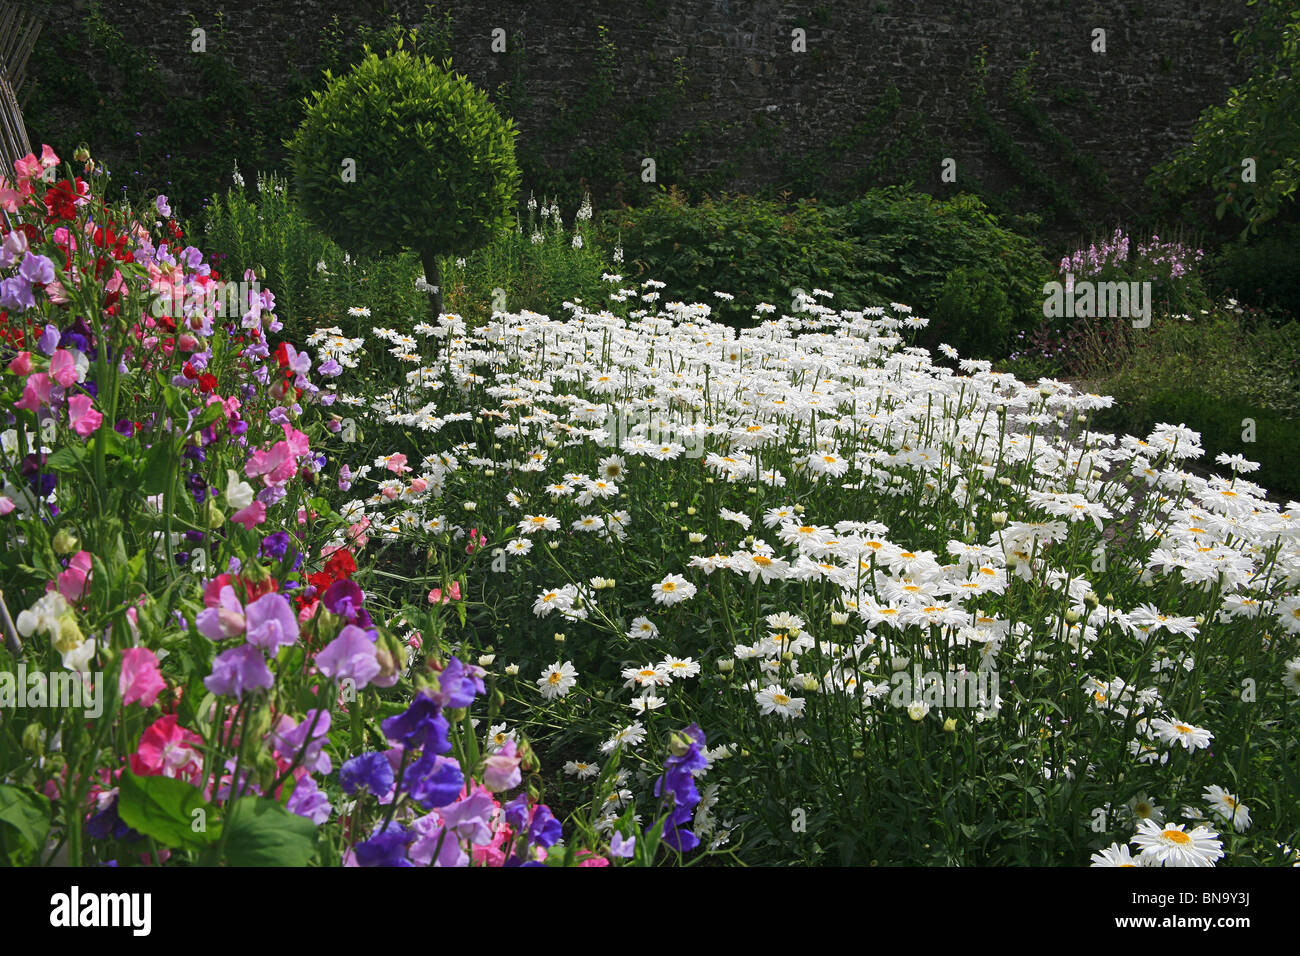 The Lower Walled Garden at Aberglasney House, Llangathen, Carmarthenshire, Wales, UK Stock Photo